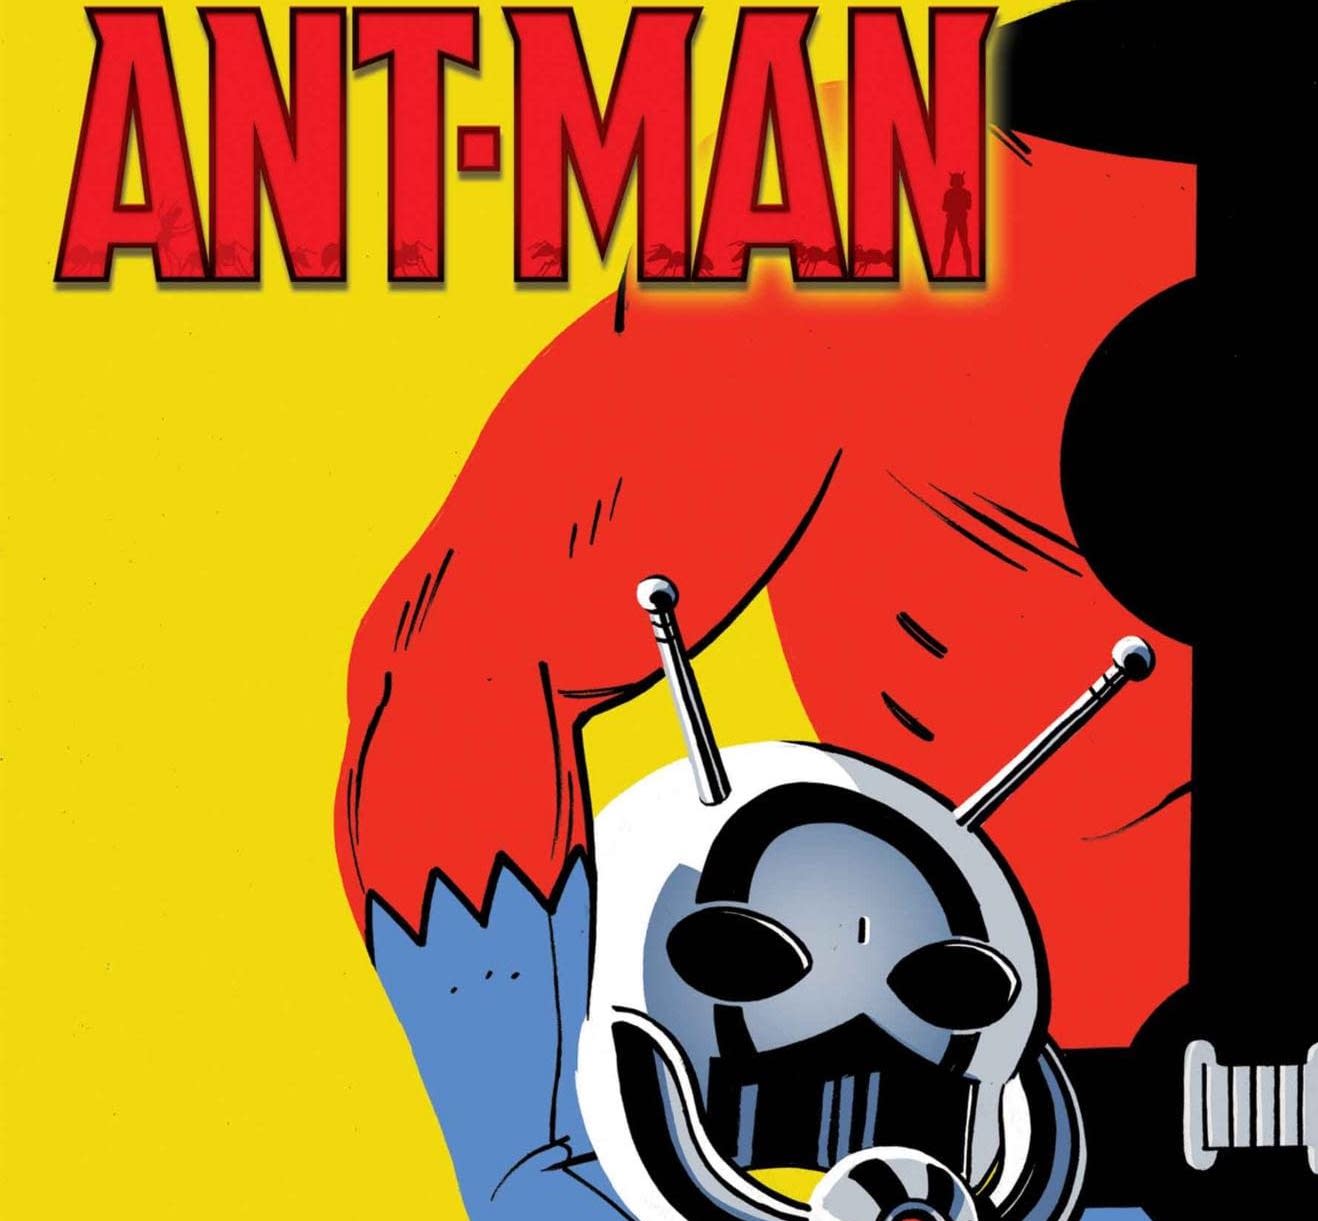 'Ant-Man' #1 is a nostalgic celebration of old-school comics